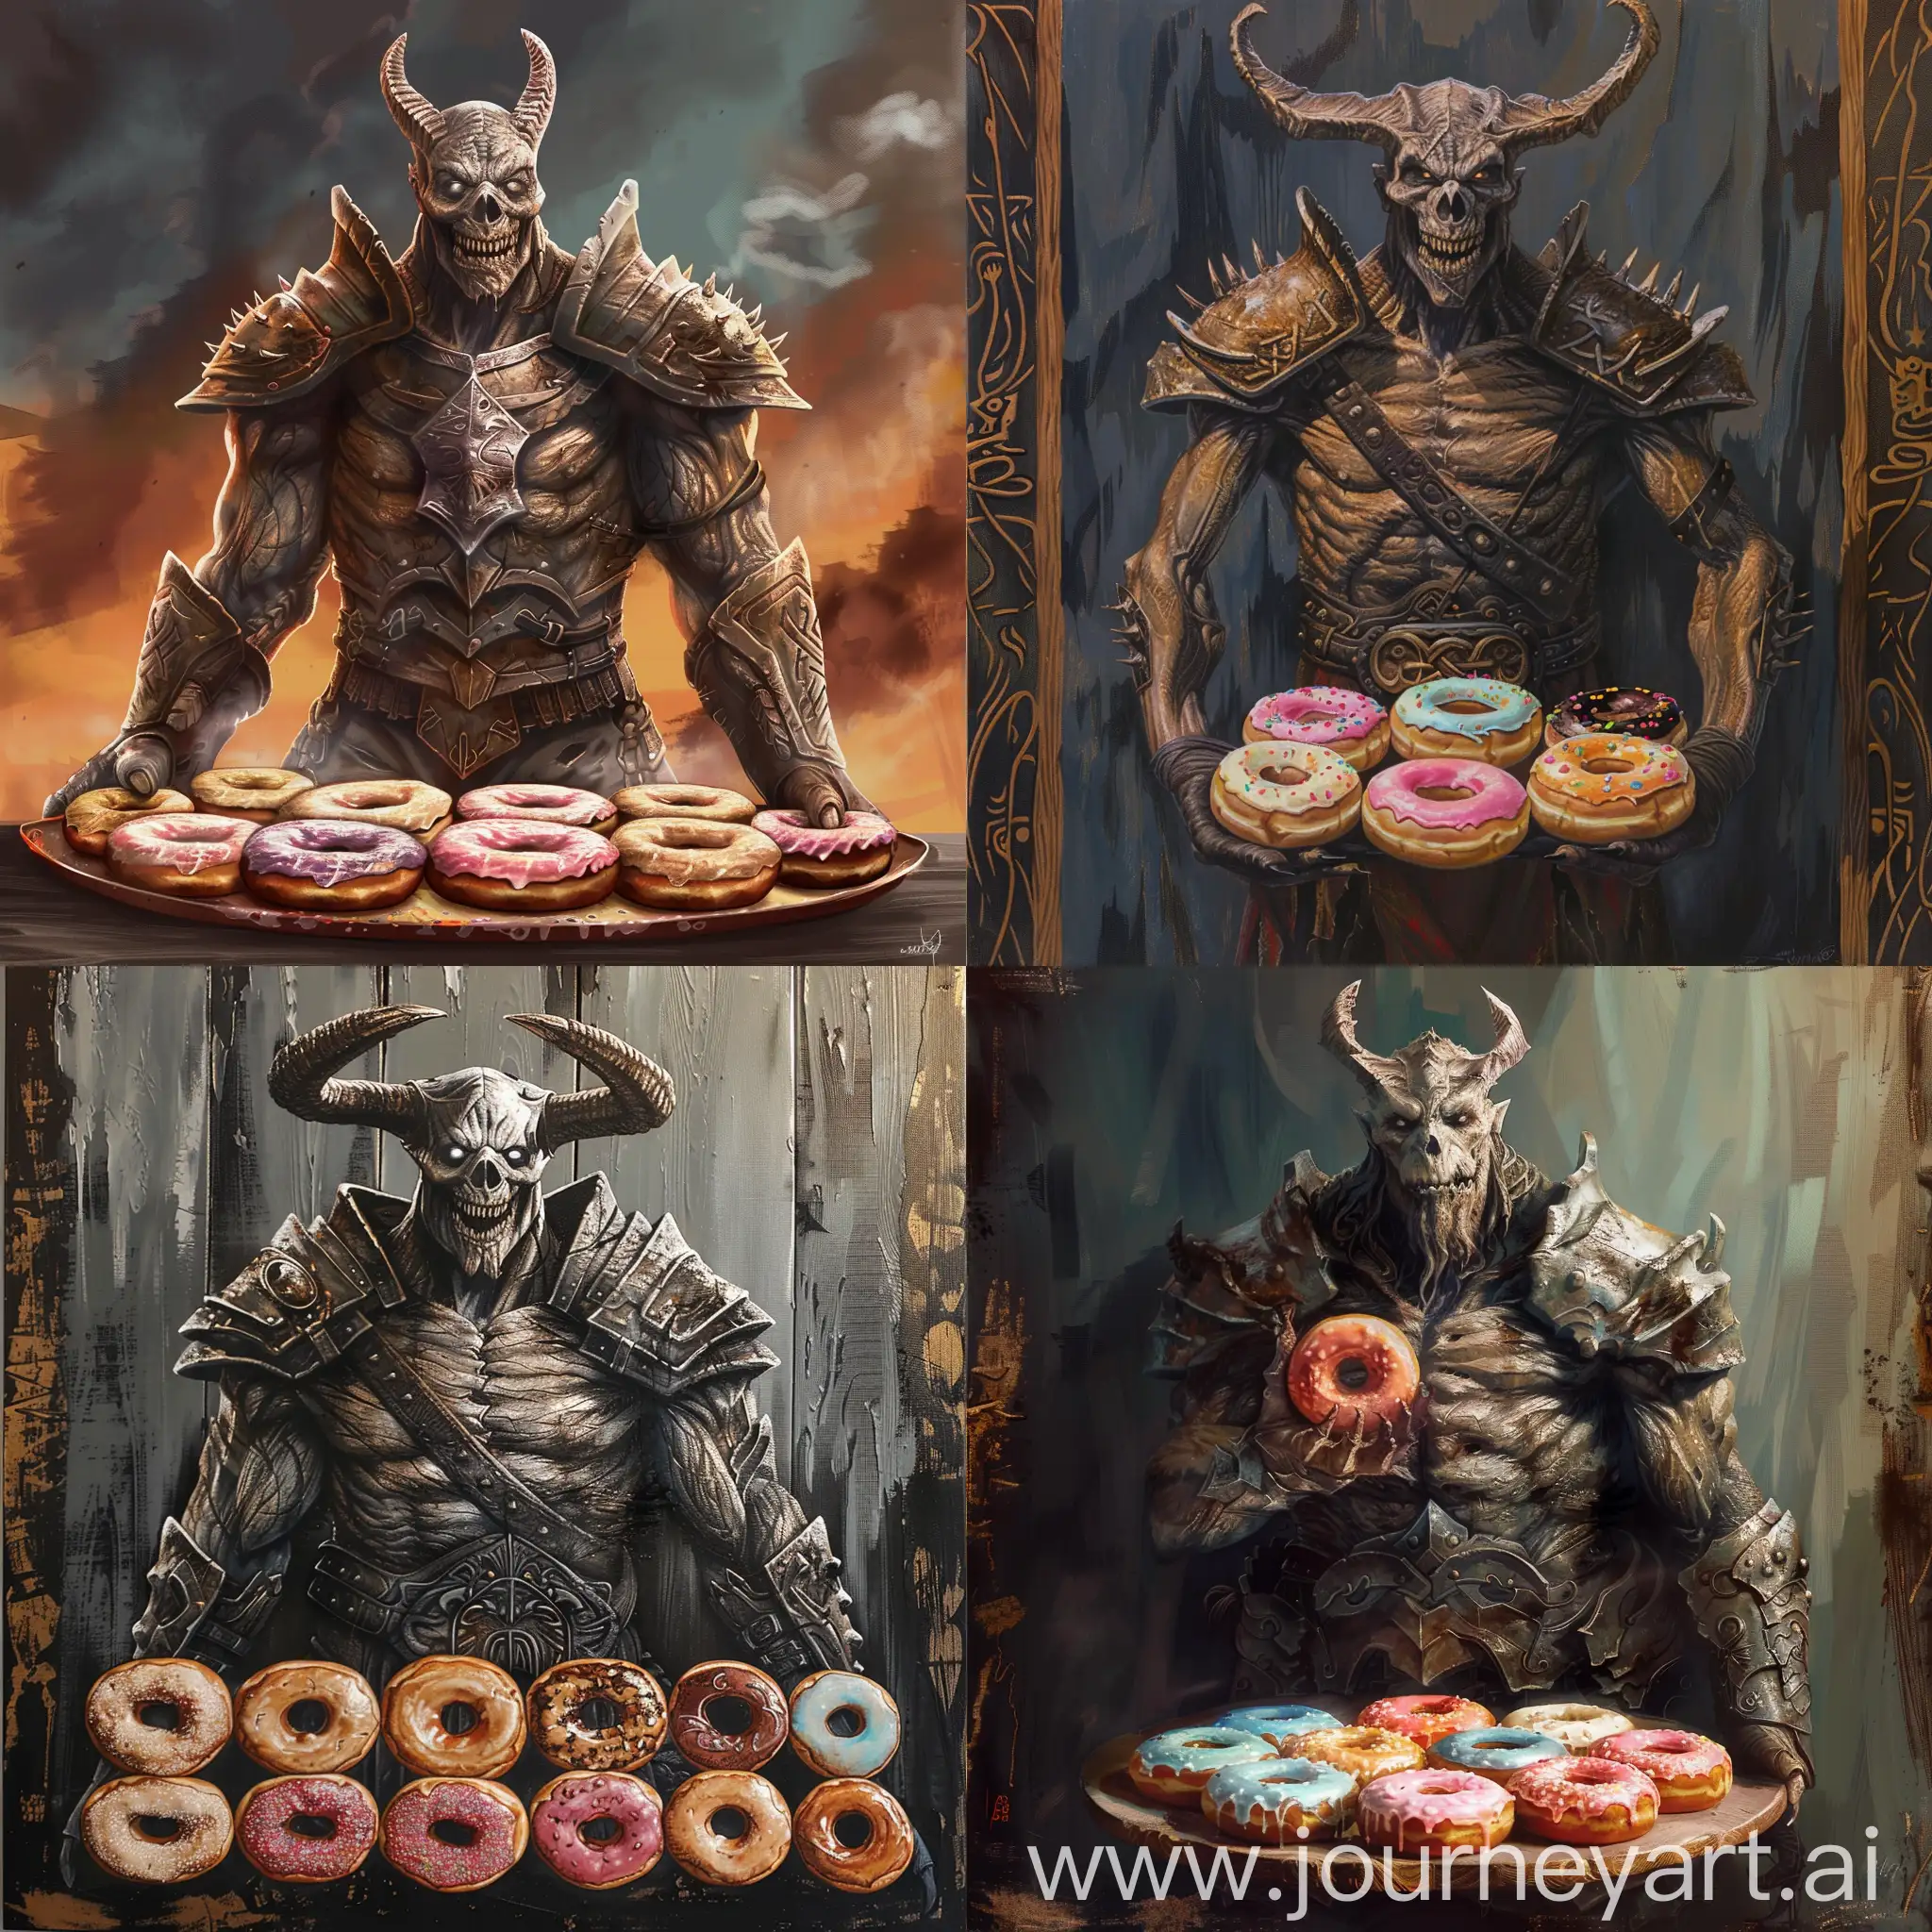 Draugr-from-Skyrim-Enjoying-a-Dozen-Donuts